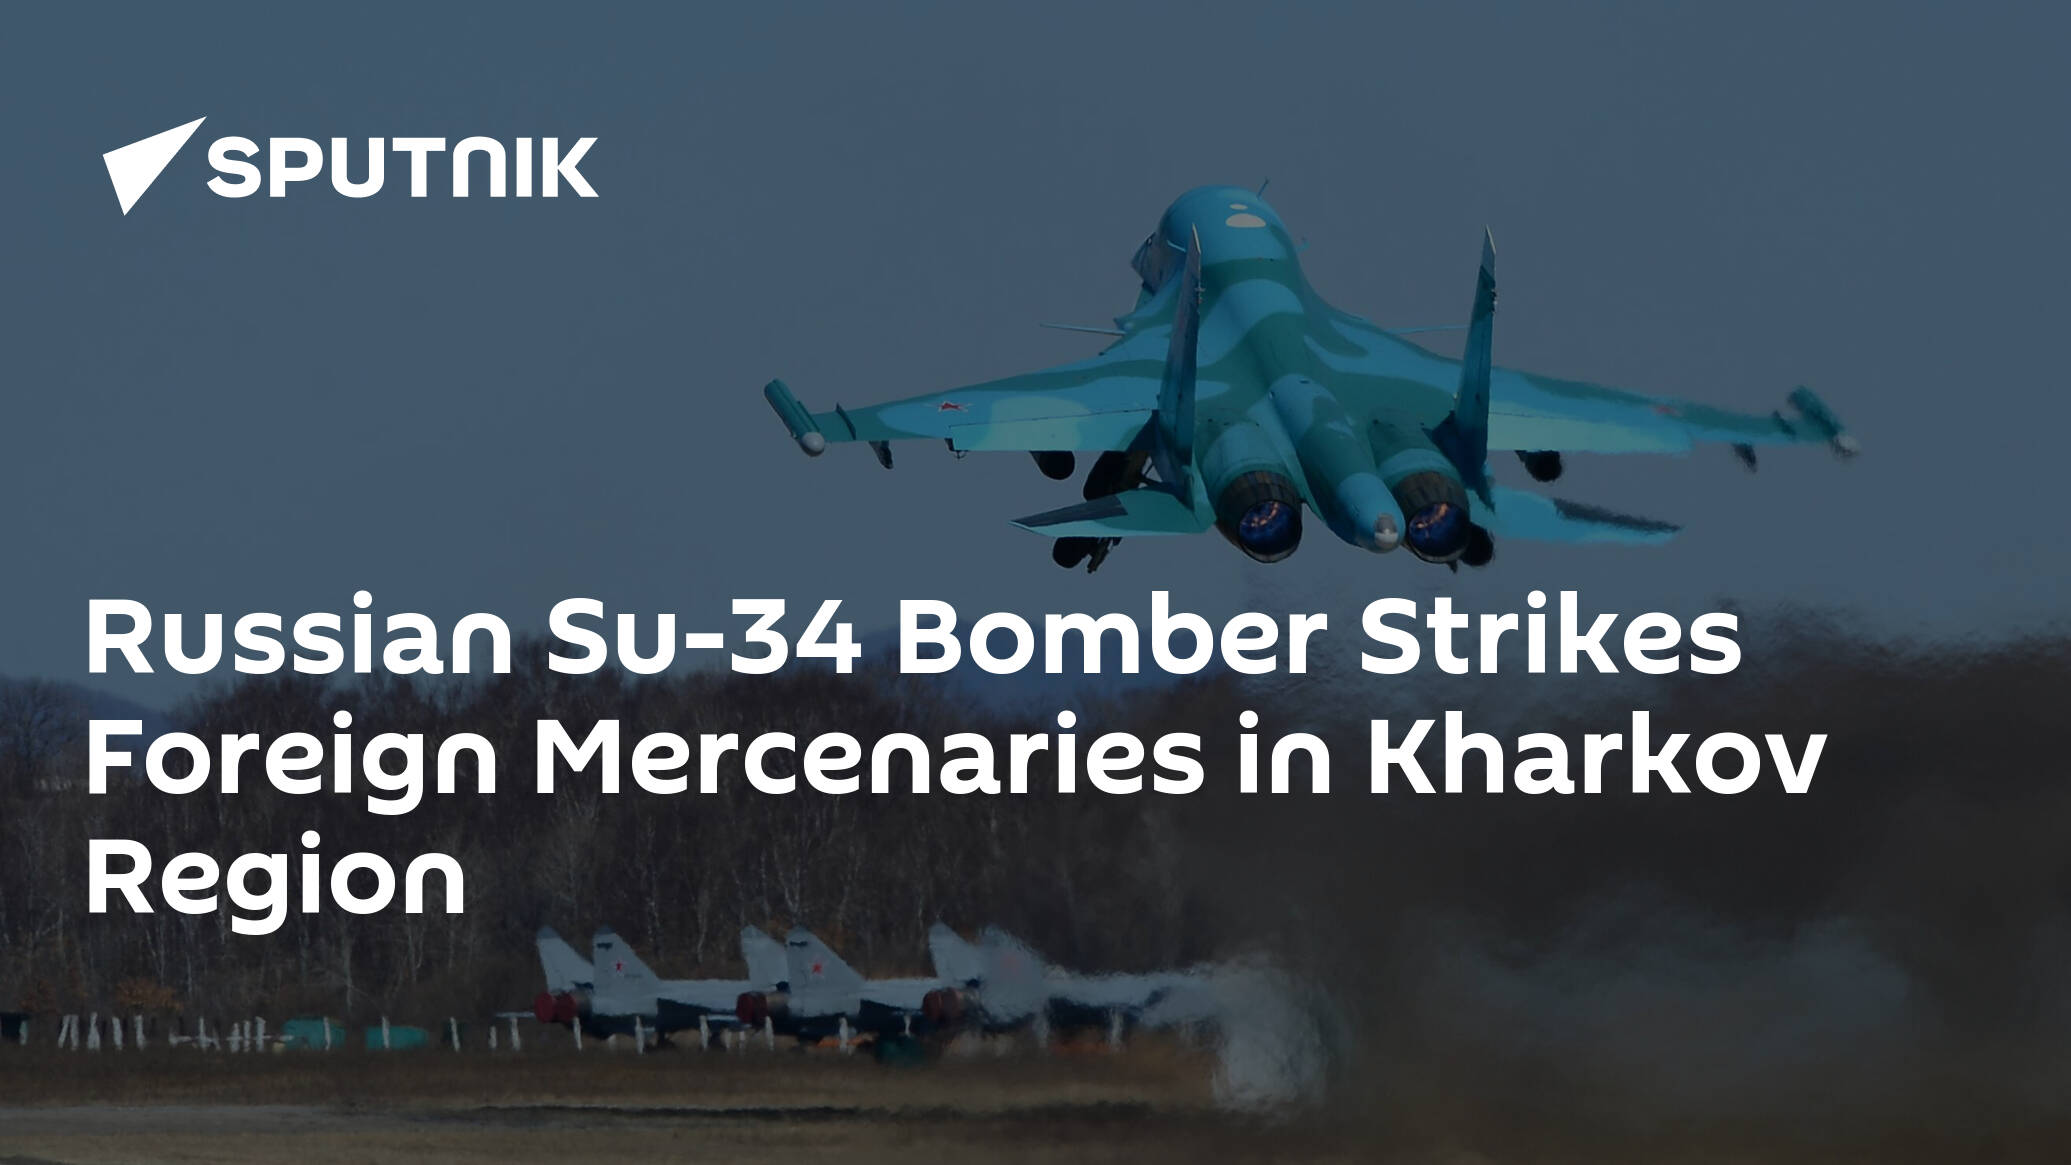 Russian Su-34 Bomber Strikes Foreign Mercenaries in Kharkov Region